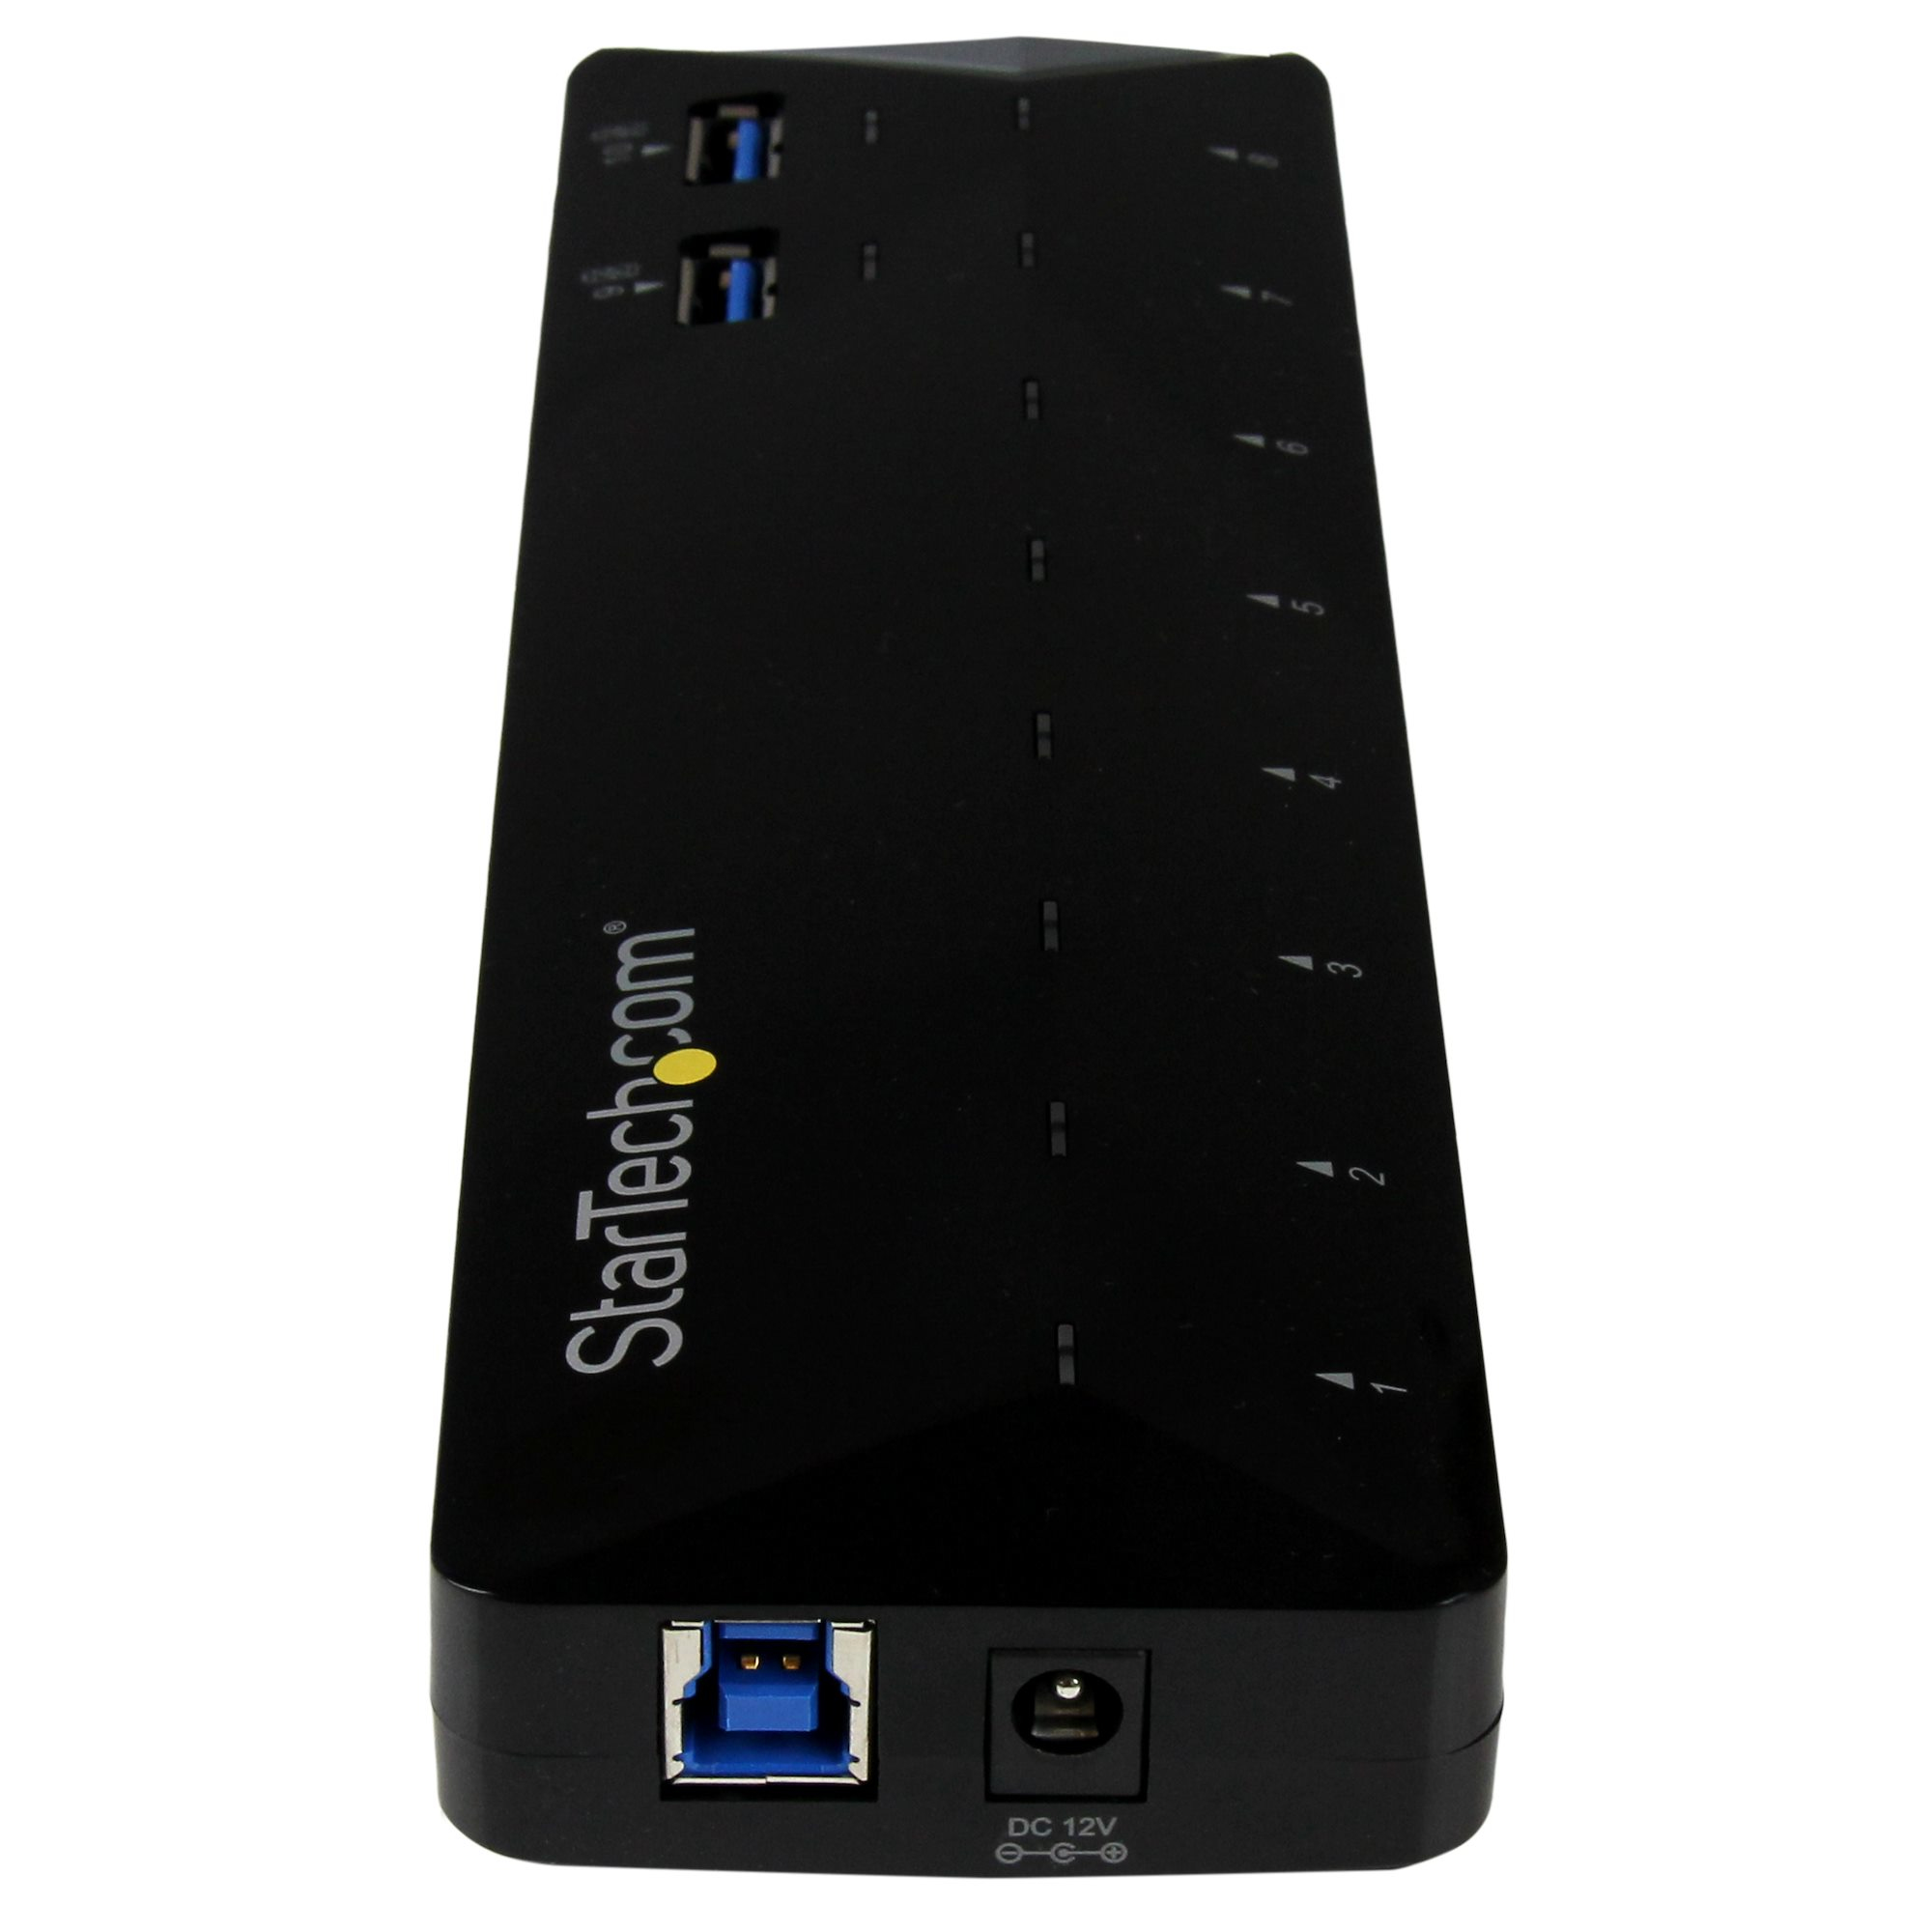 StarTech.com 10 Port USB 3.0 Hub mit Lade- und Sync Port